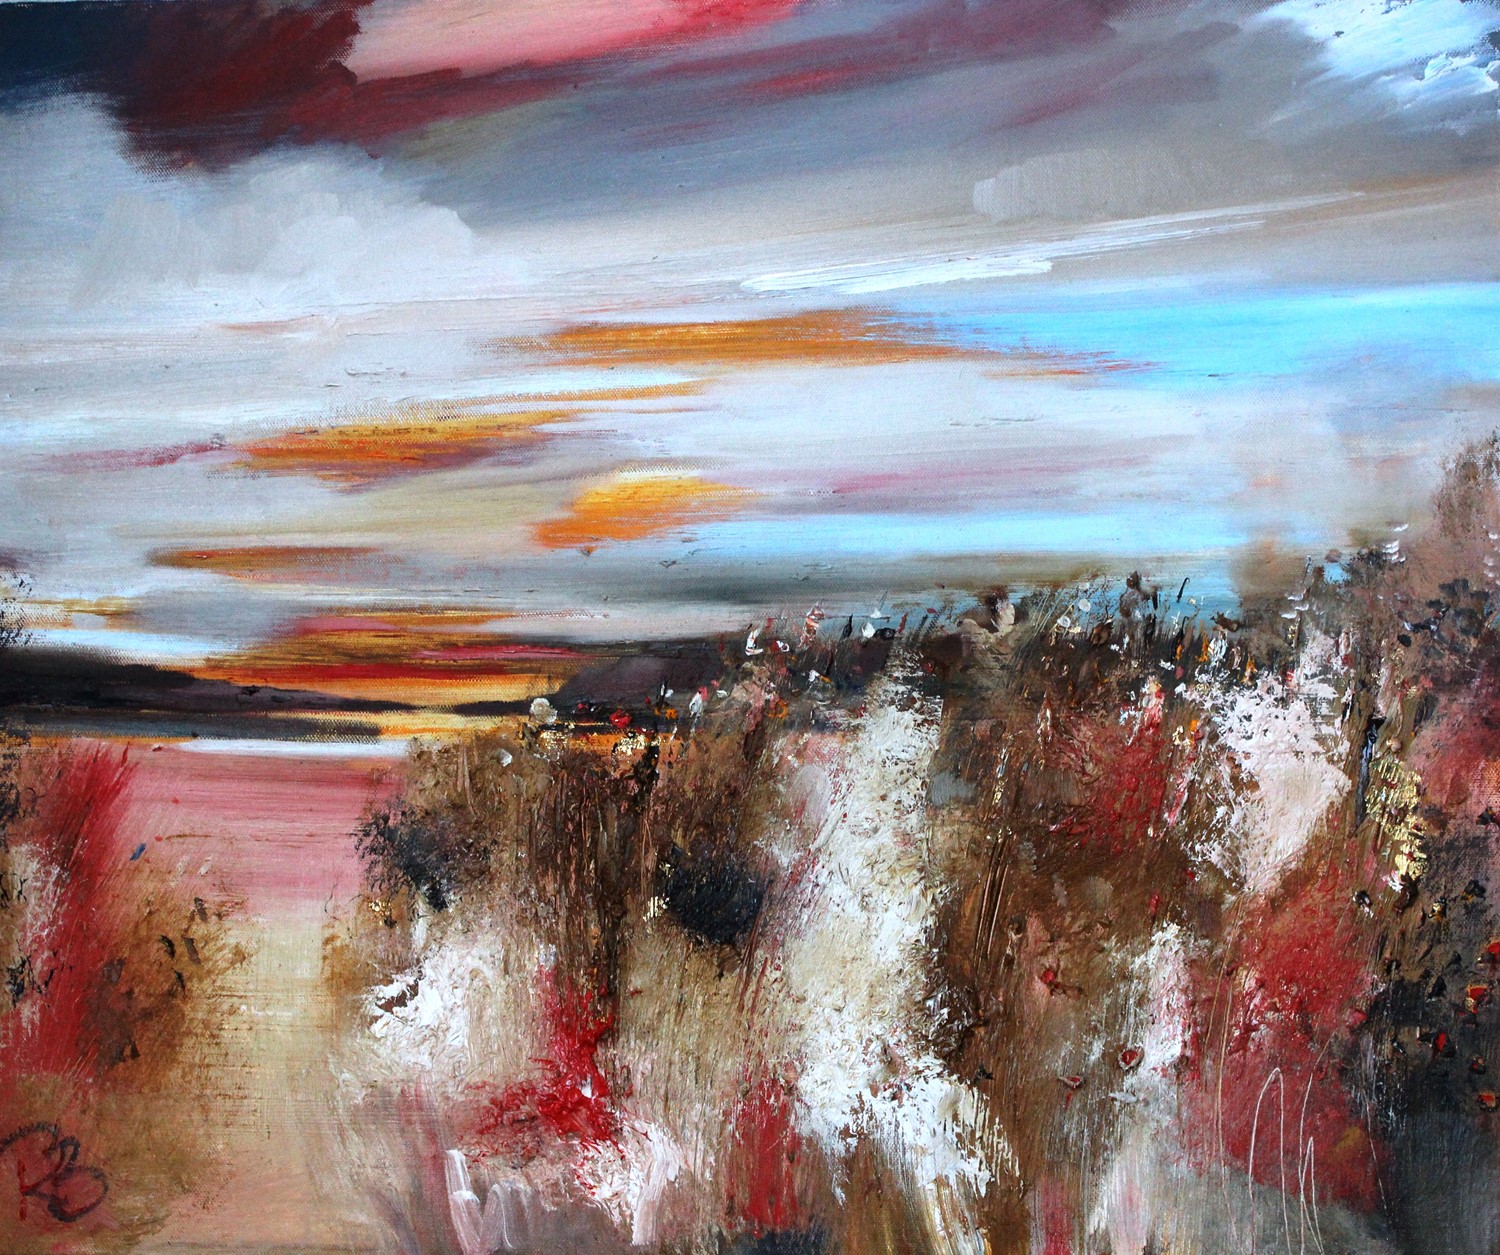 'Autumn at Sunset' by artist Rosanne Barr